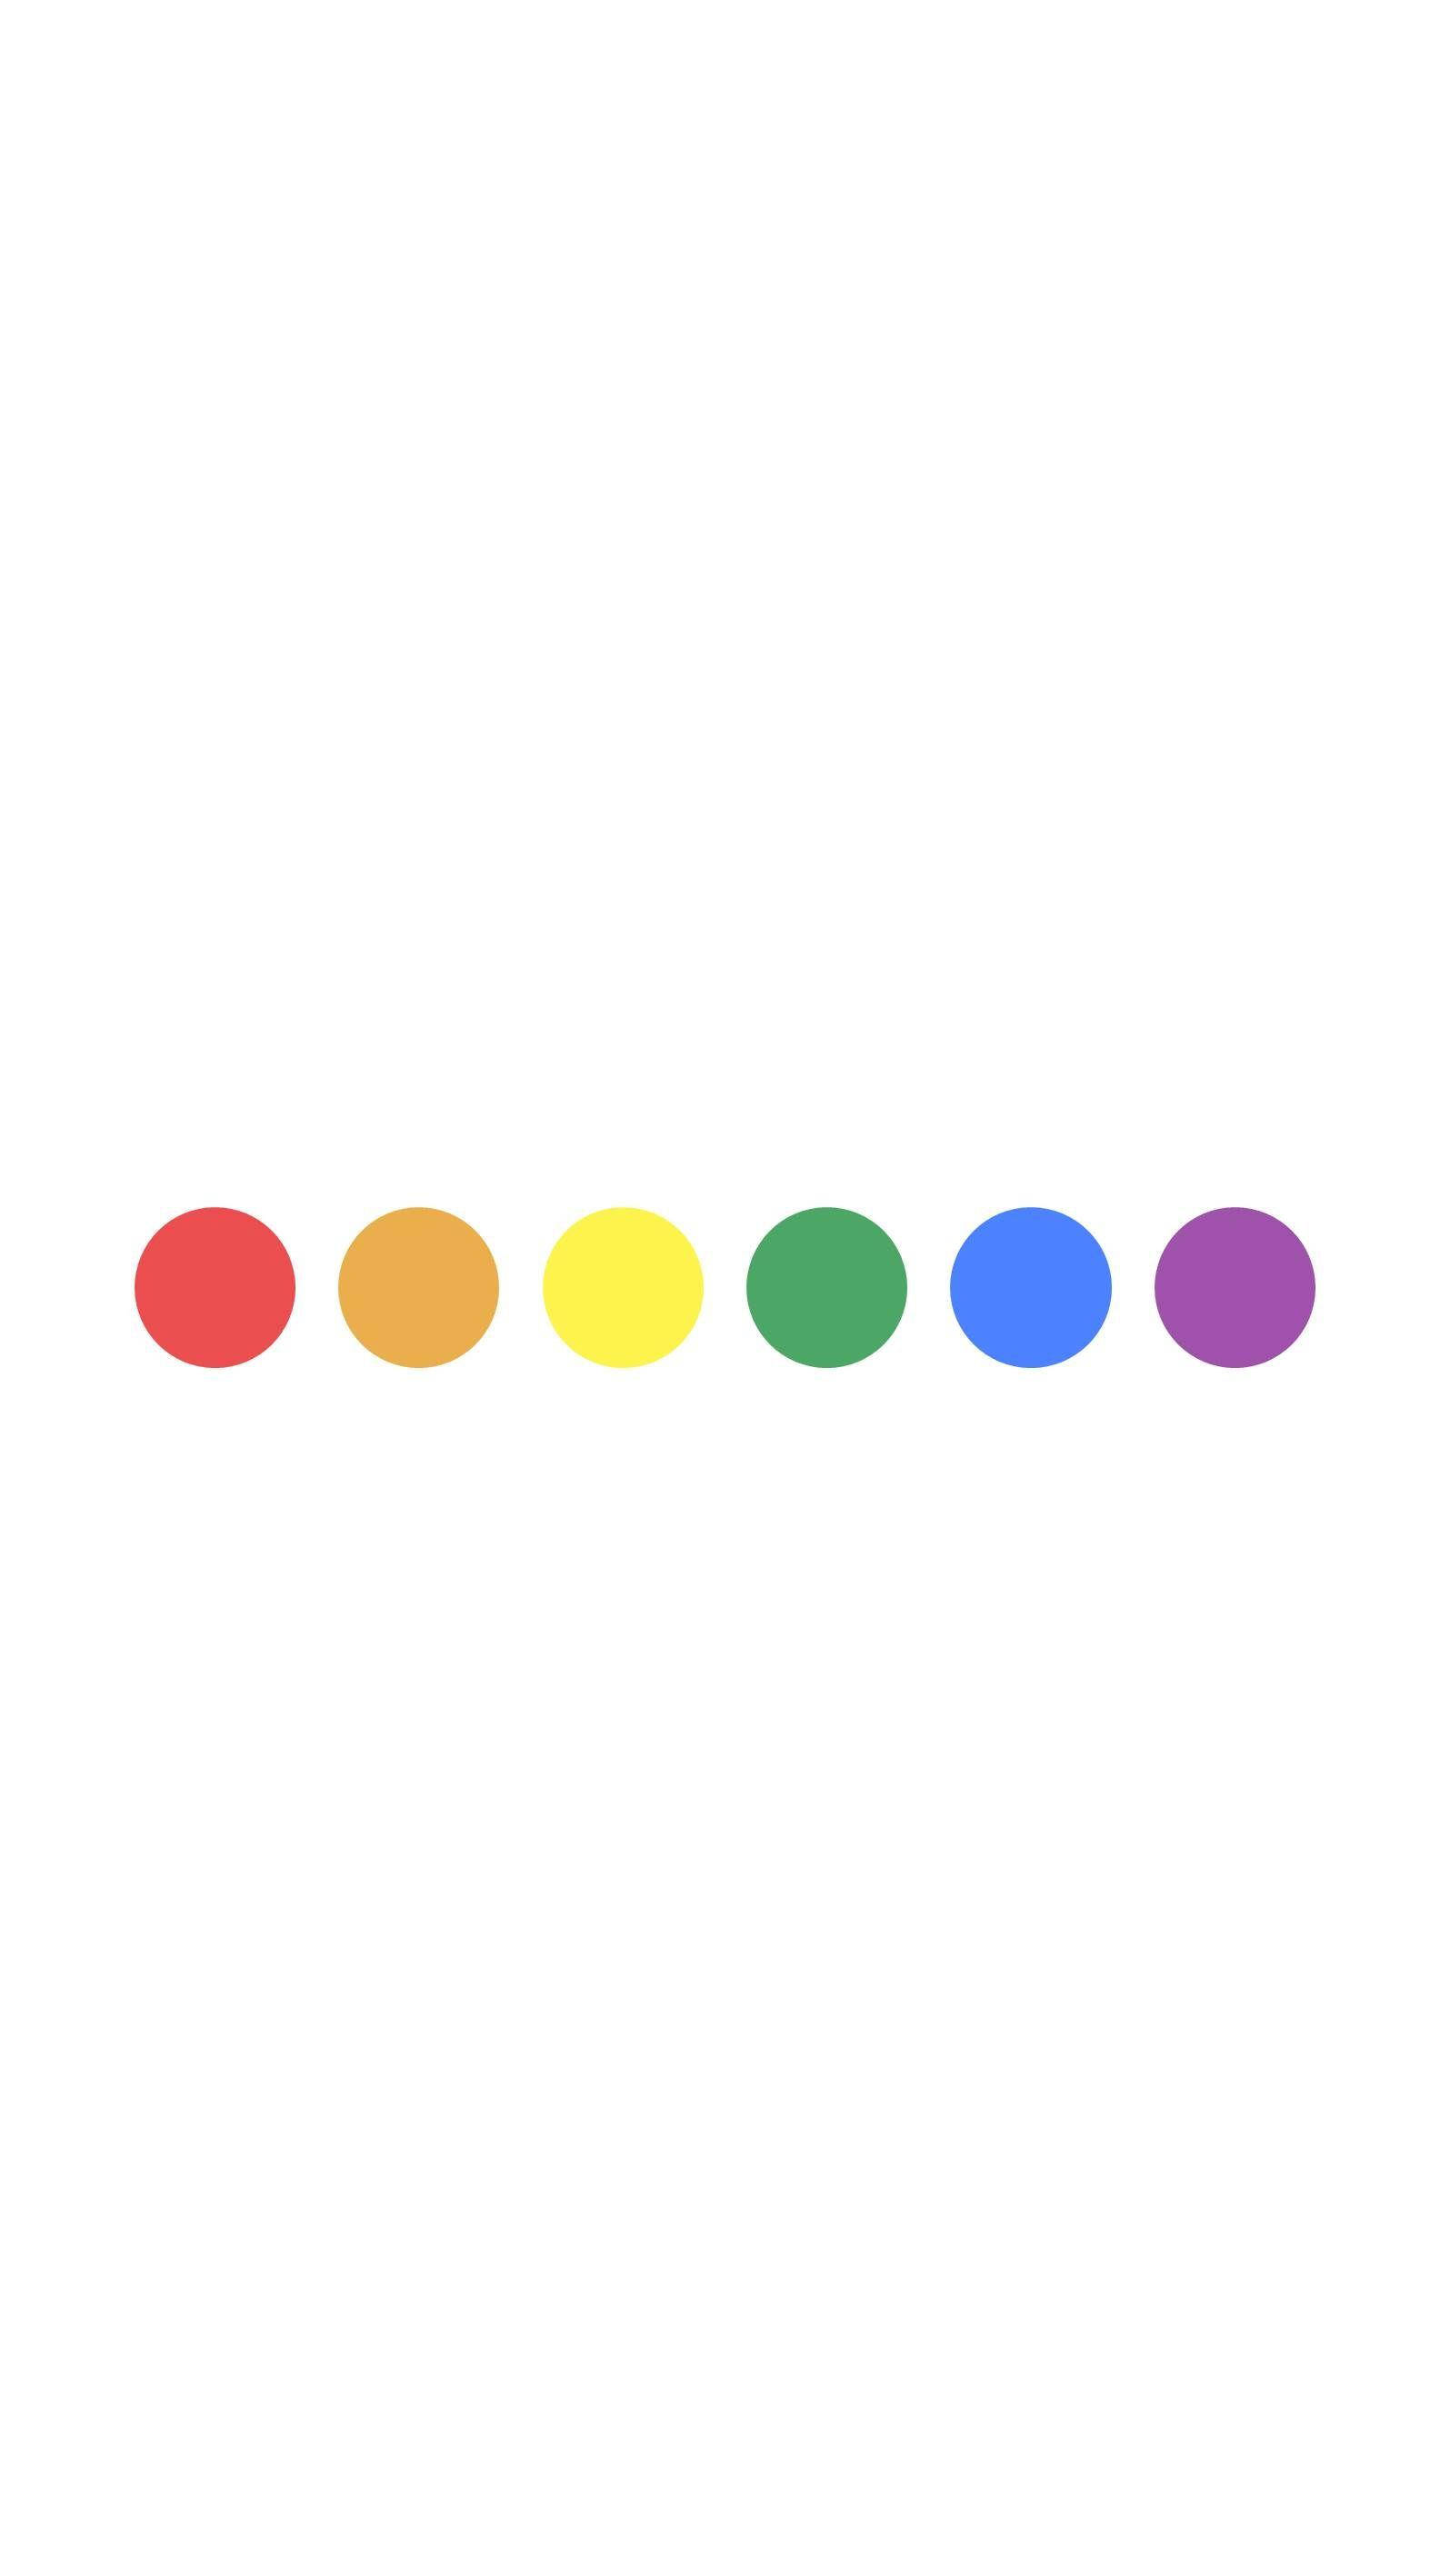 Nice Digital Circles In Queer Colors